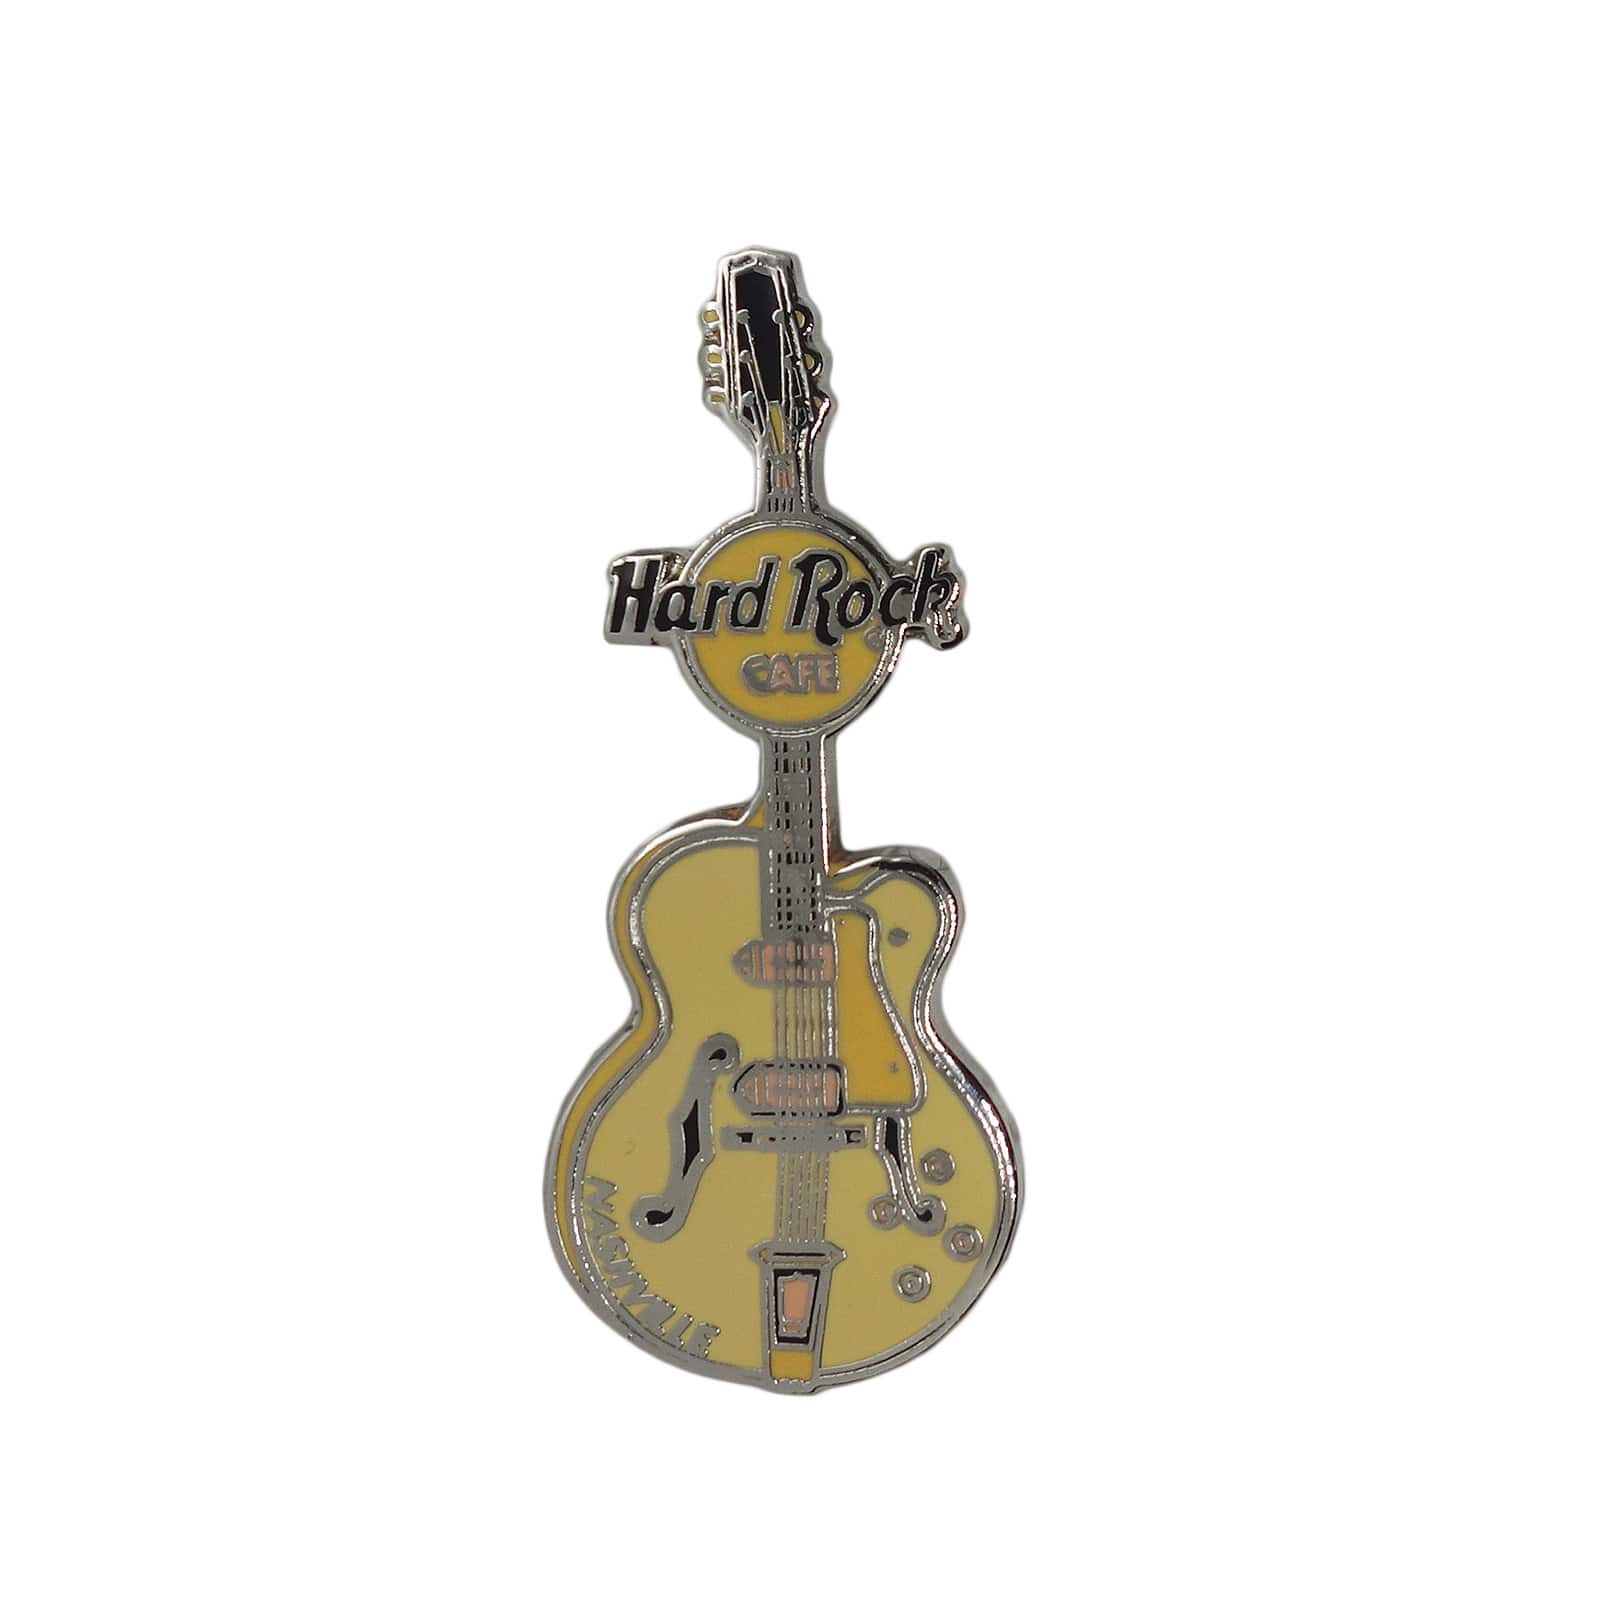 Hard Rock CAFE ギター ピンズ ハードロックカフェ NASHVILLE 留め具付き